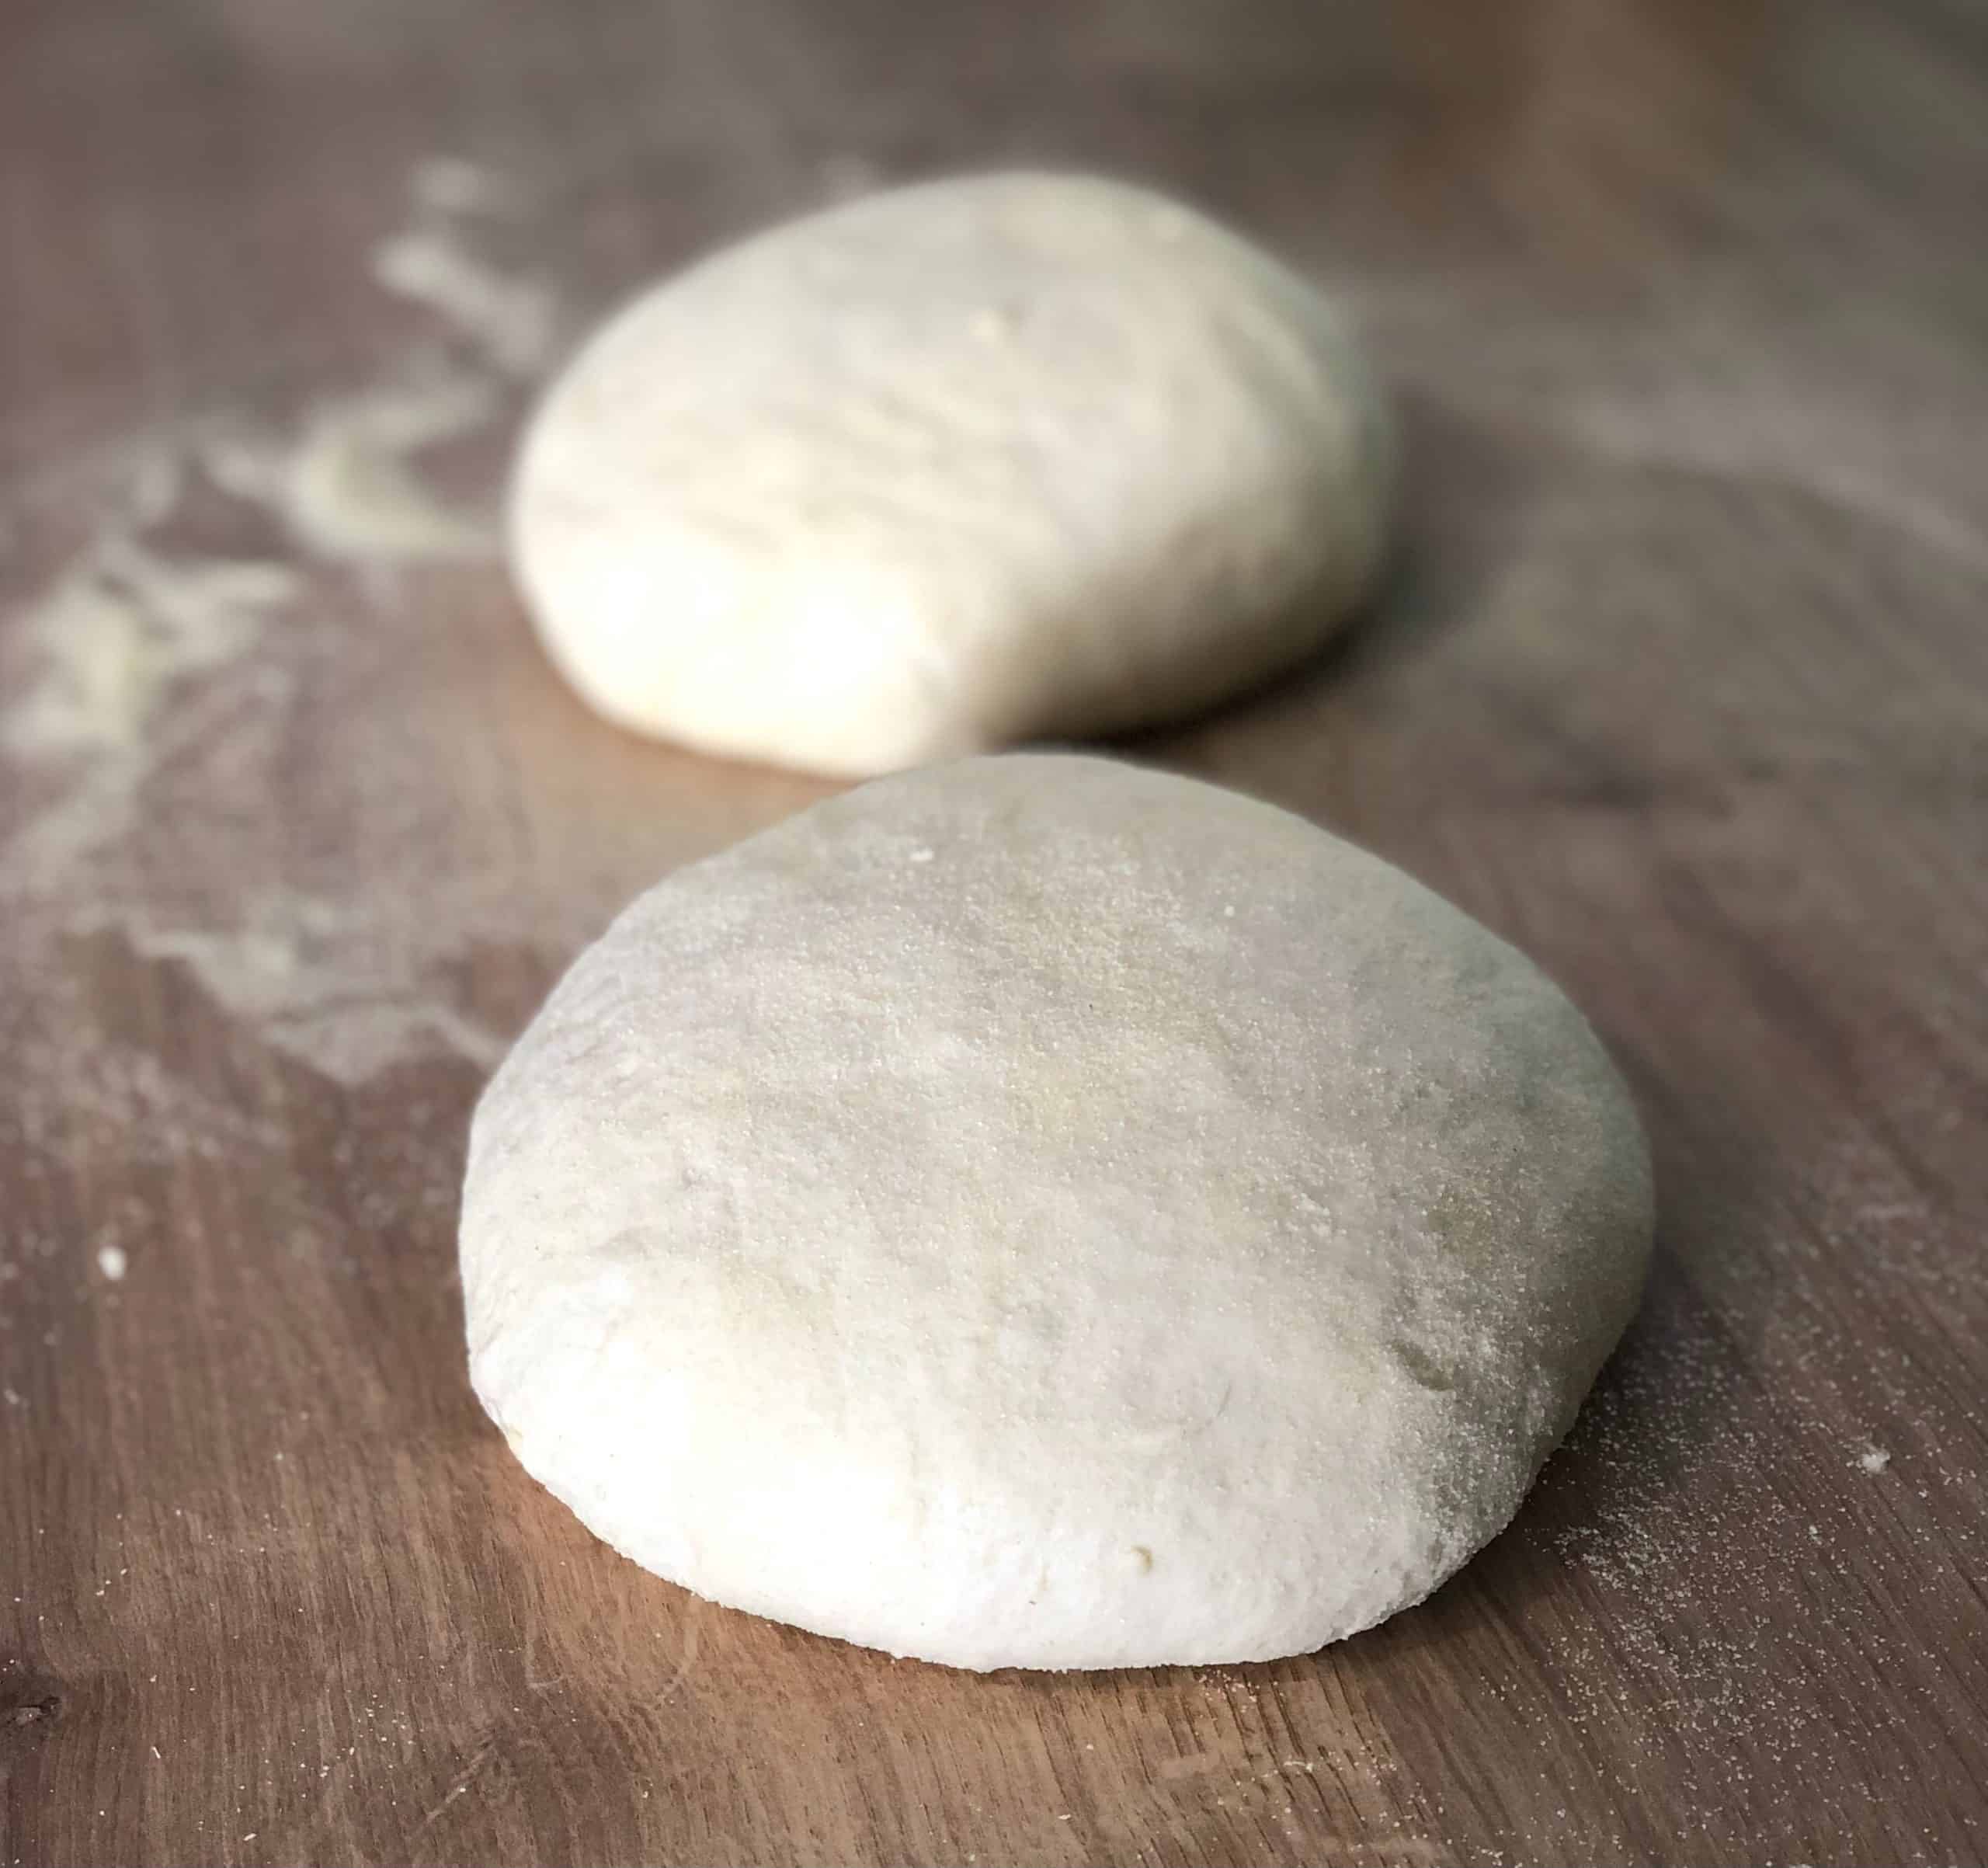 No knead bread dough shapped into a ball